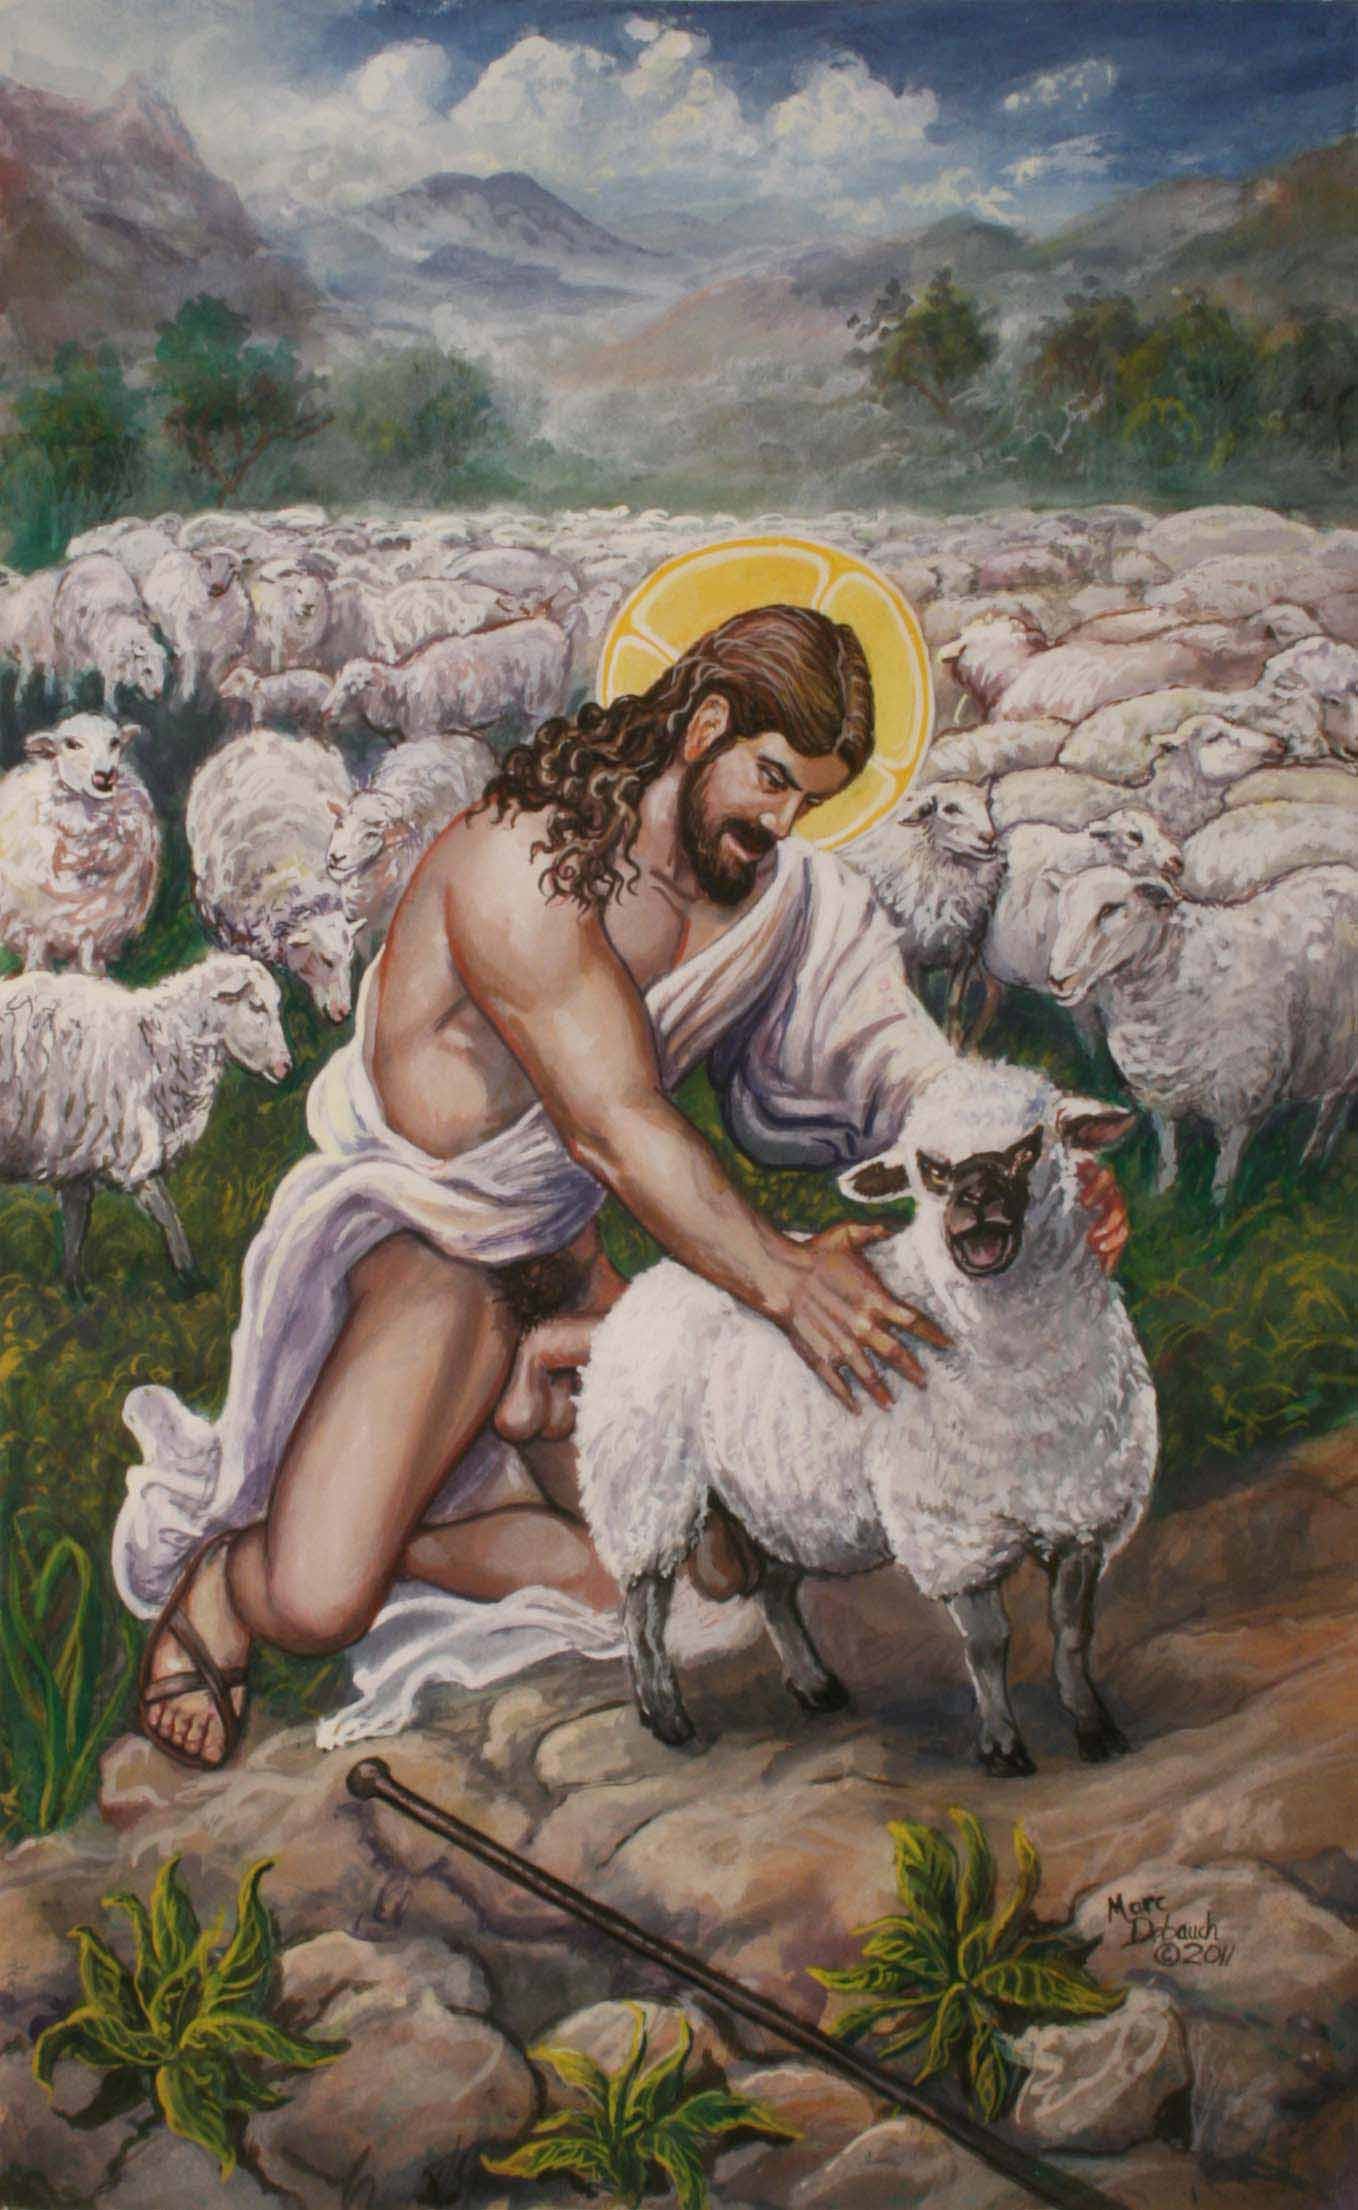 Sheep With Human Porn - 143470 - e621